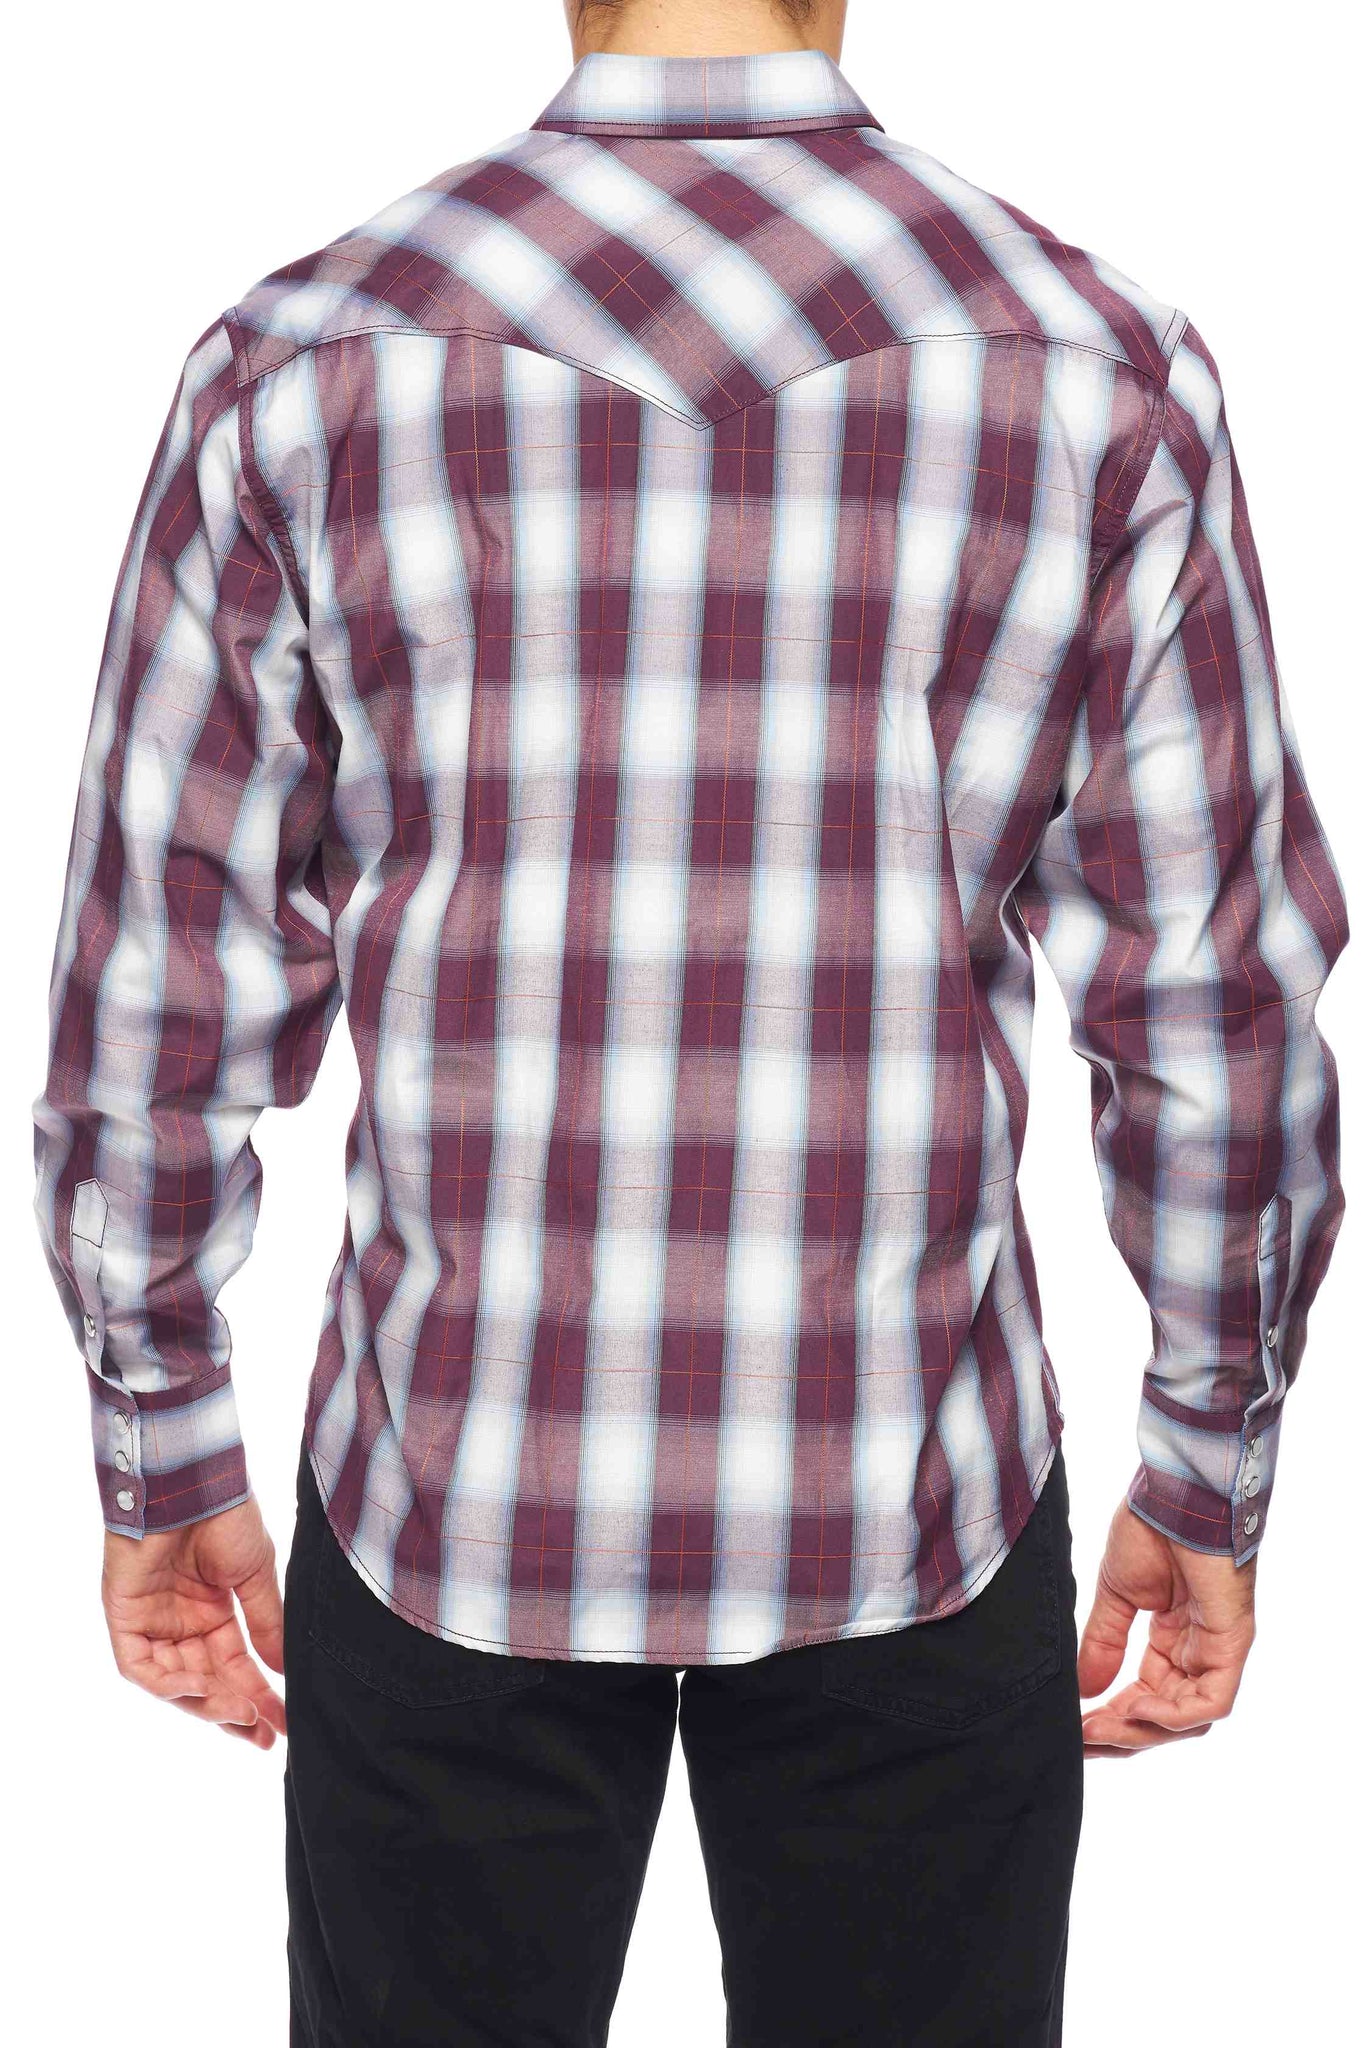 Men's Western Long Sleeve Pearl Snap Plaid Shirt - PS400-405